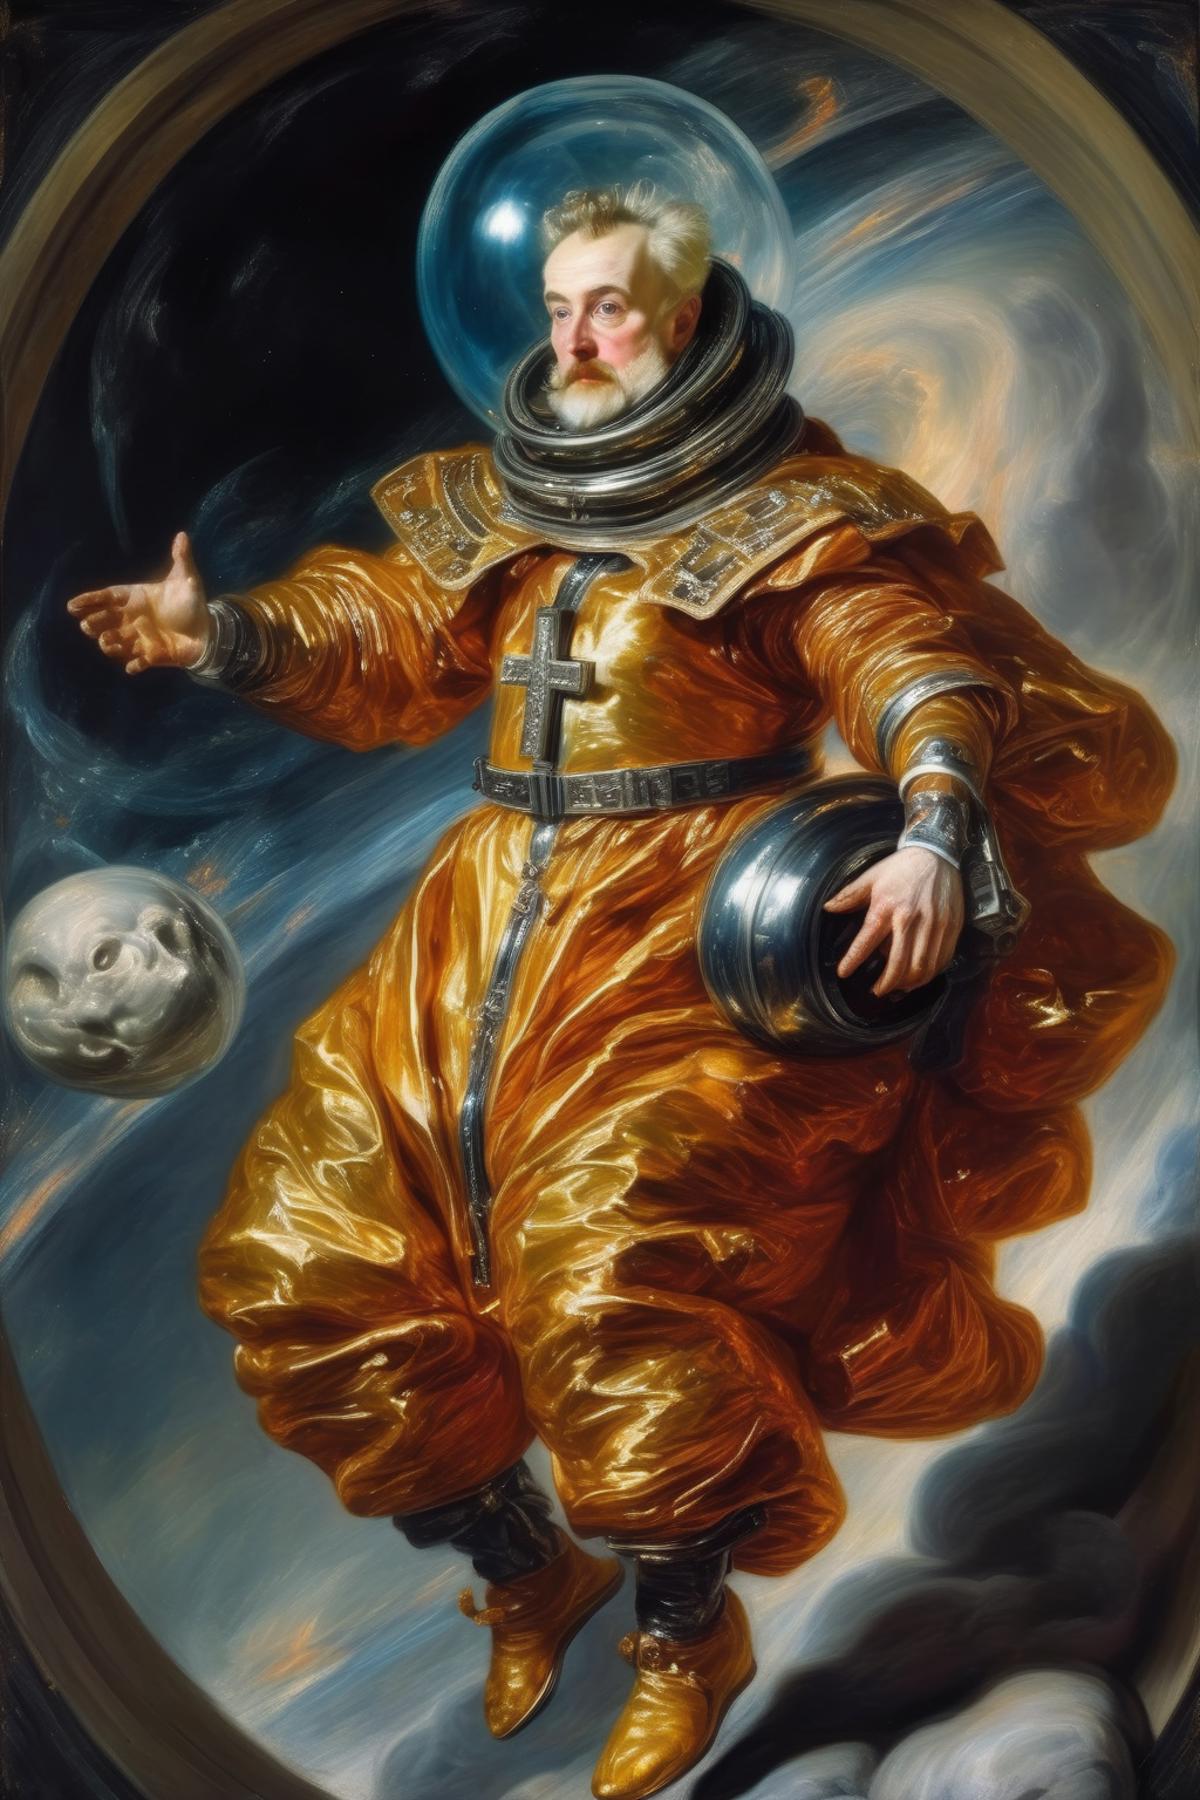 Peter Paul Rubens Style image by Kappa_Neuro